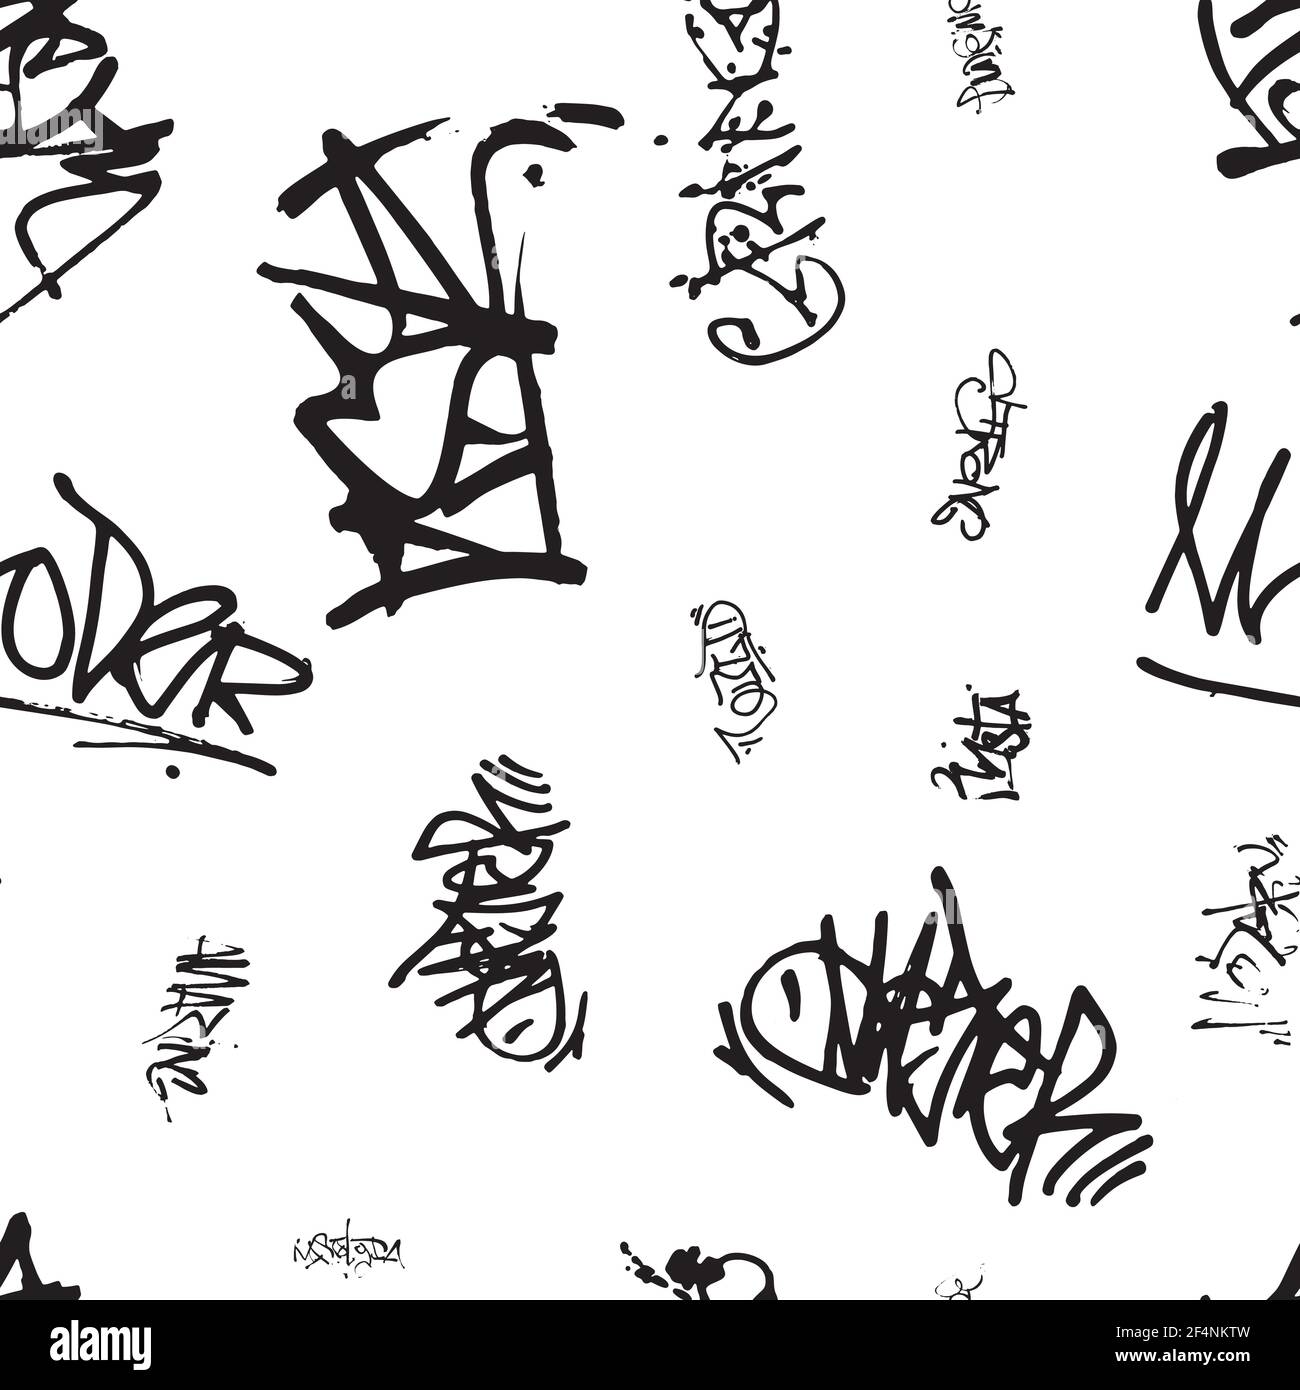 graffiti tag letters